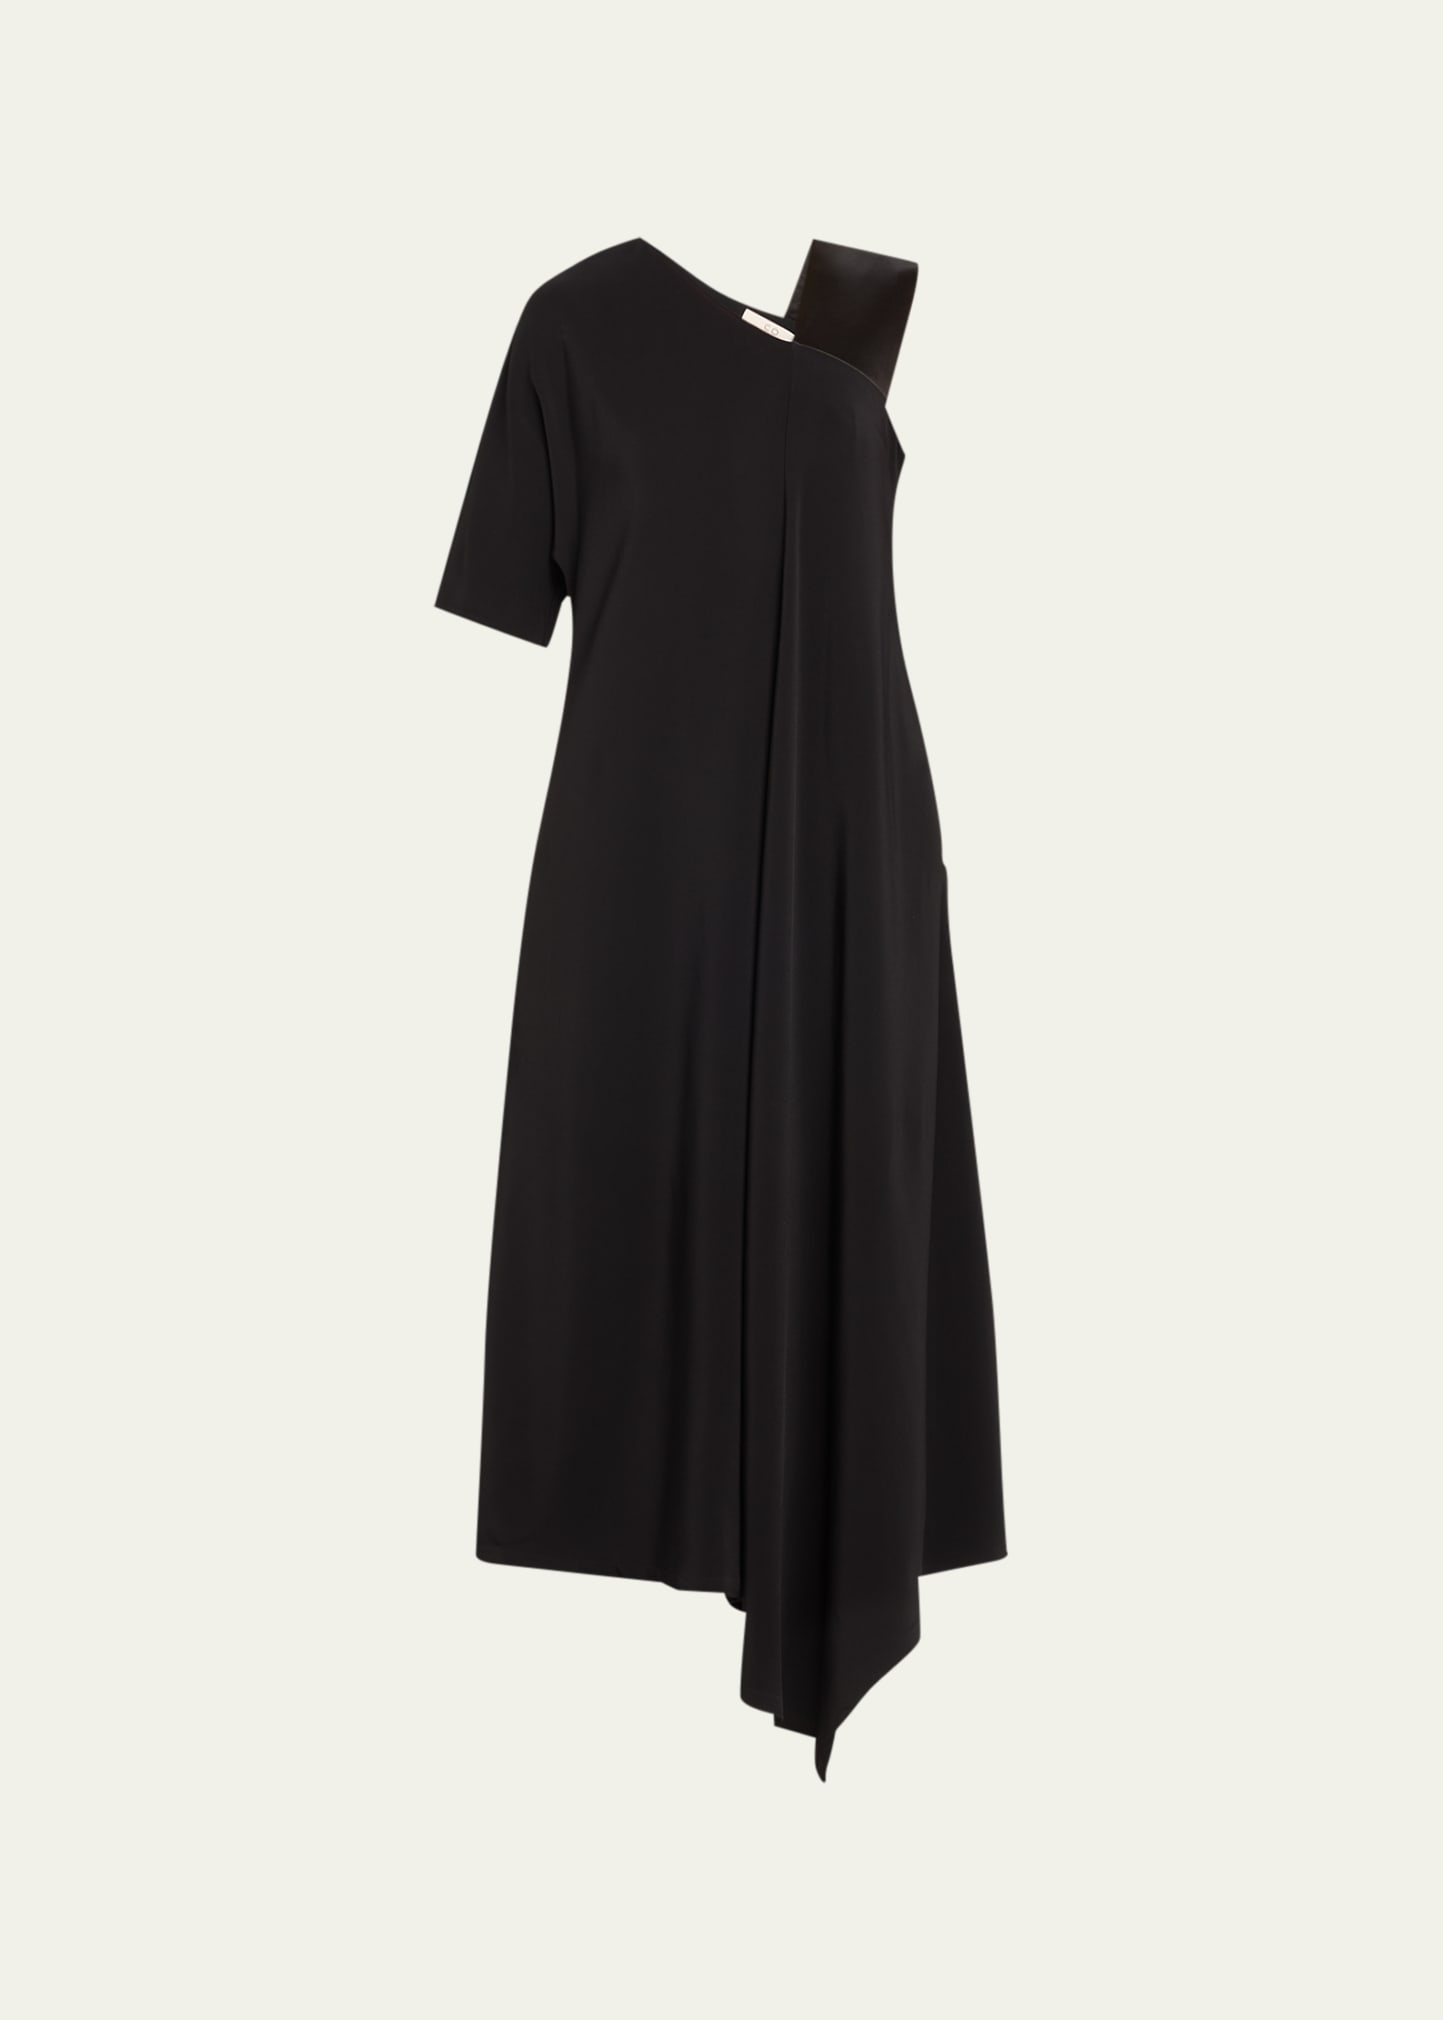 Napkin Asymmetric One-Shoulder Dress